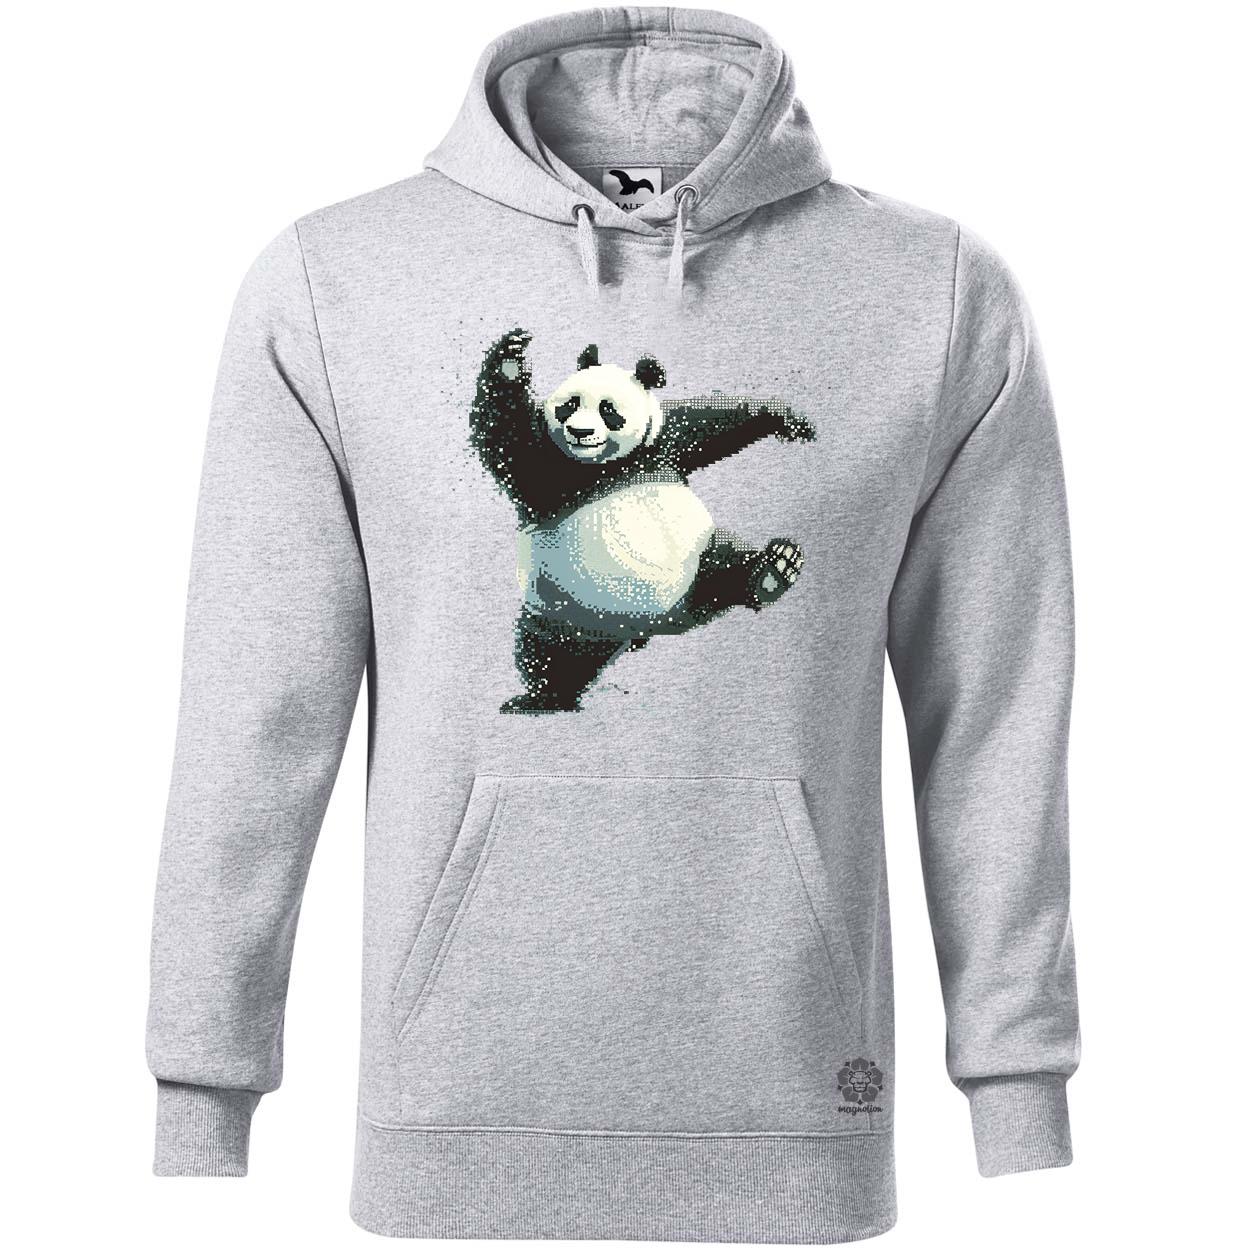 Pixelart kung fu panda v4